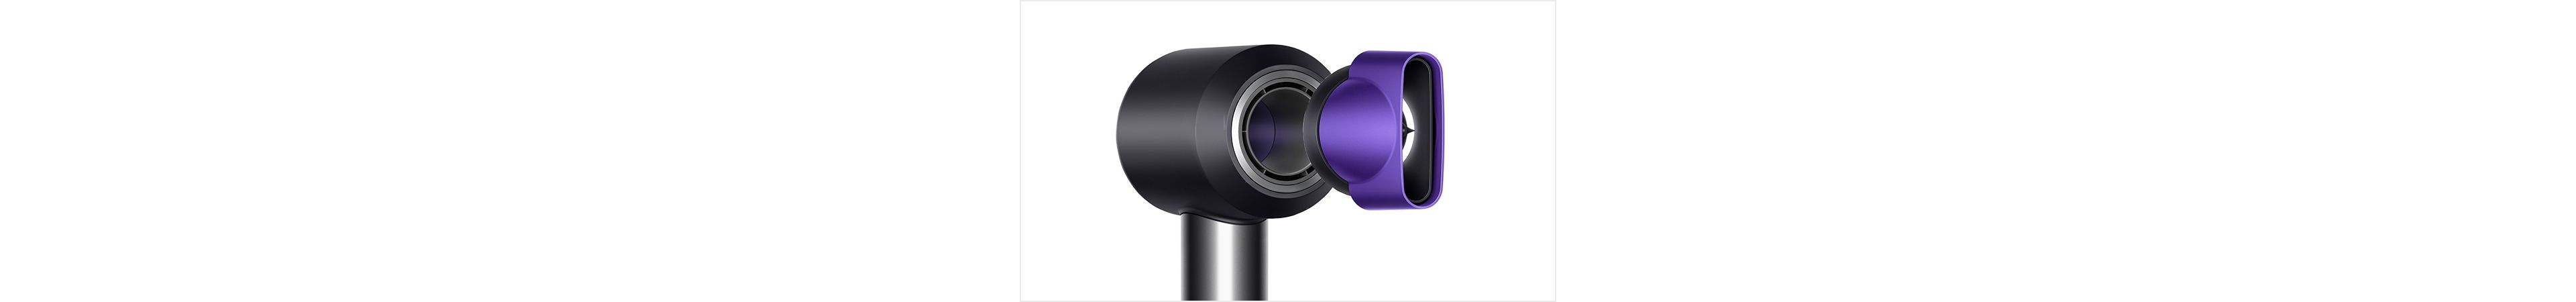 Dyson Supersonic Hair Dryer, Black/Purple - wide 7